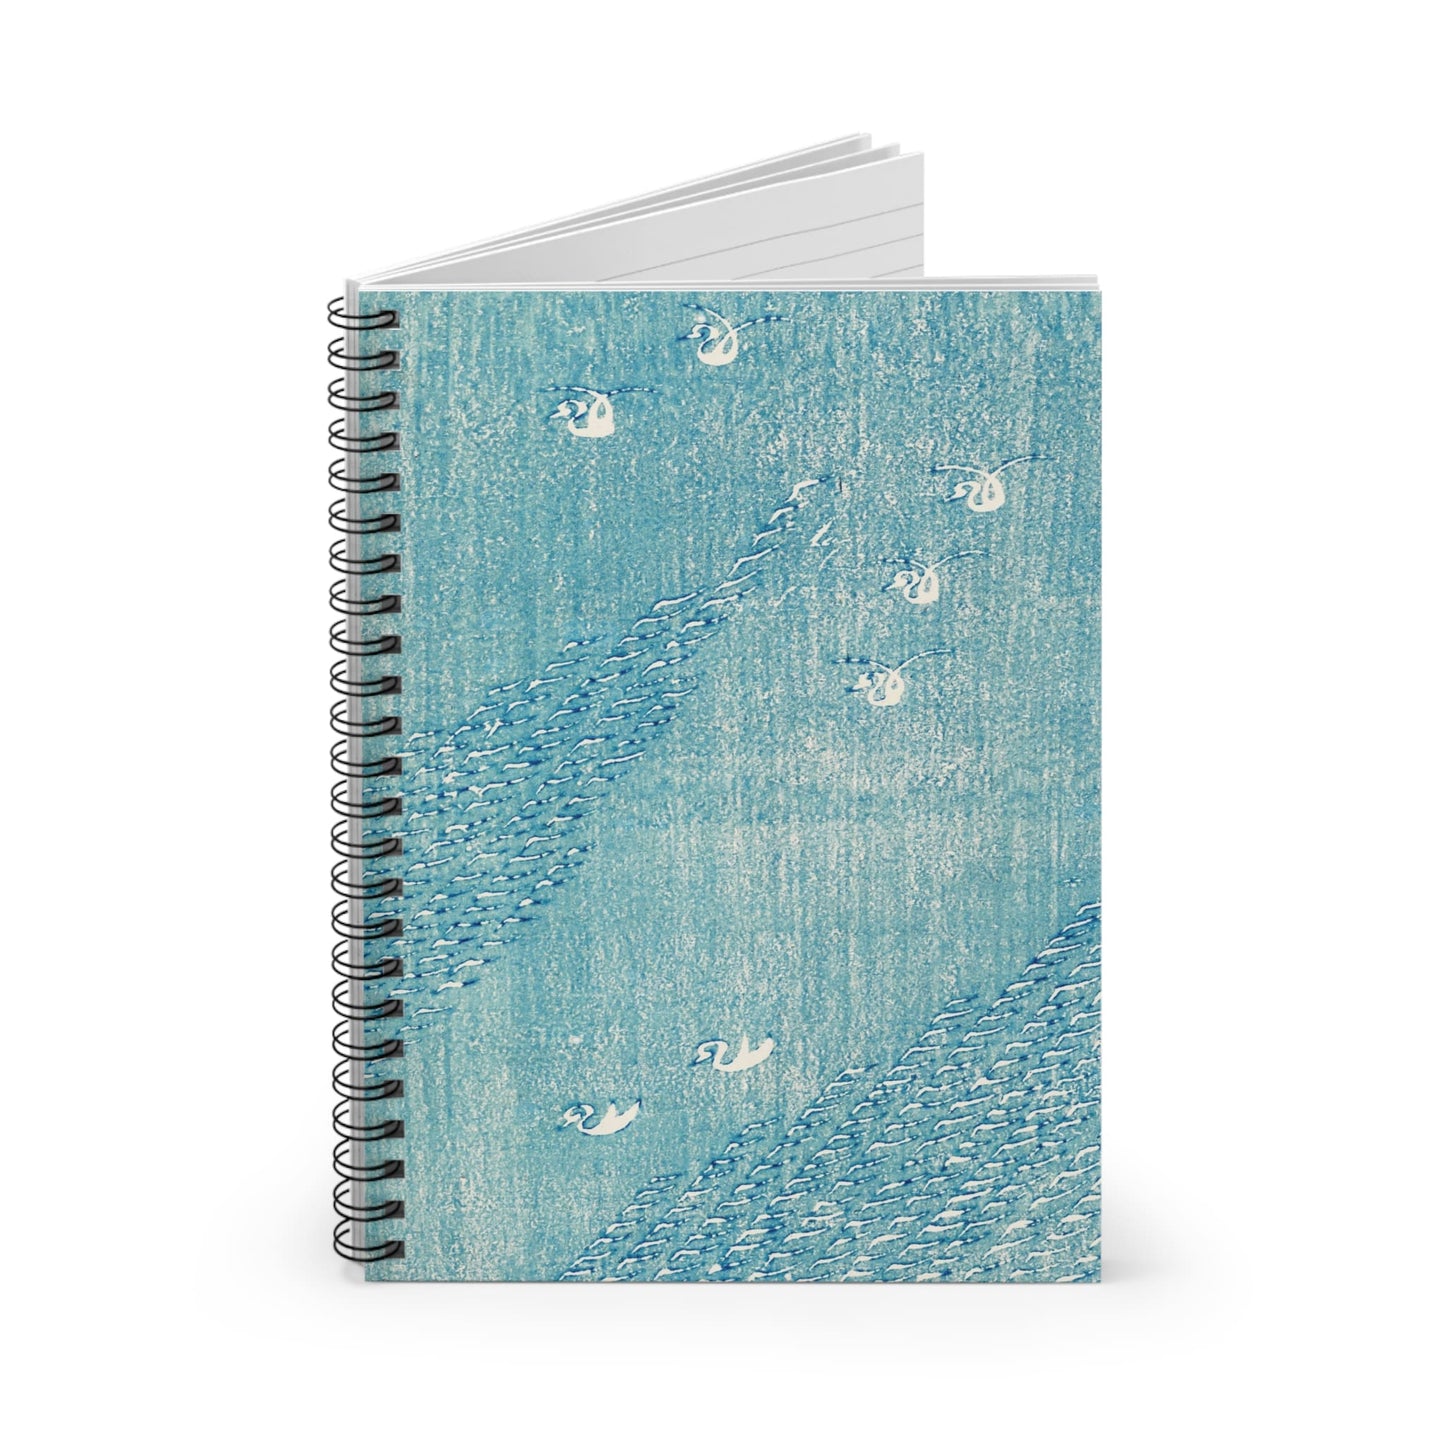 Light Blue Minimalist Spiral Notebook Standing up on White Desk